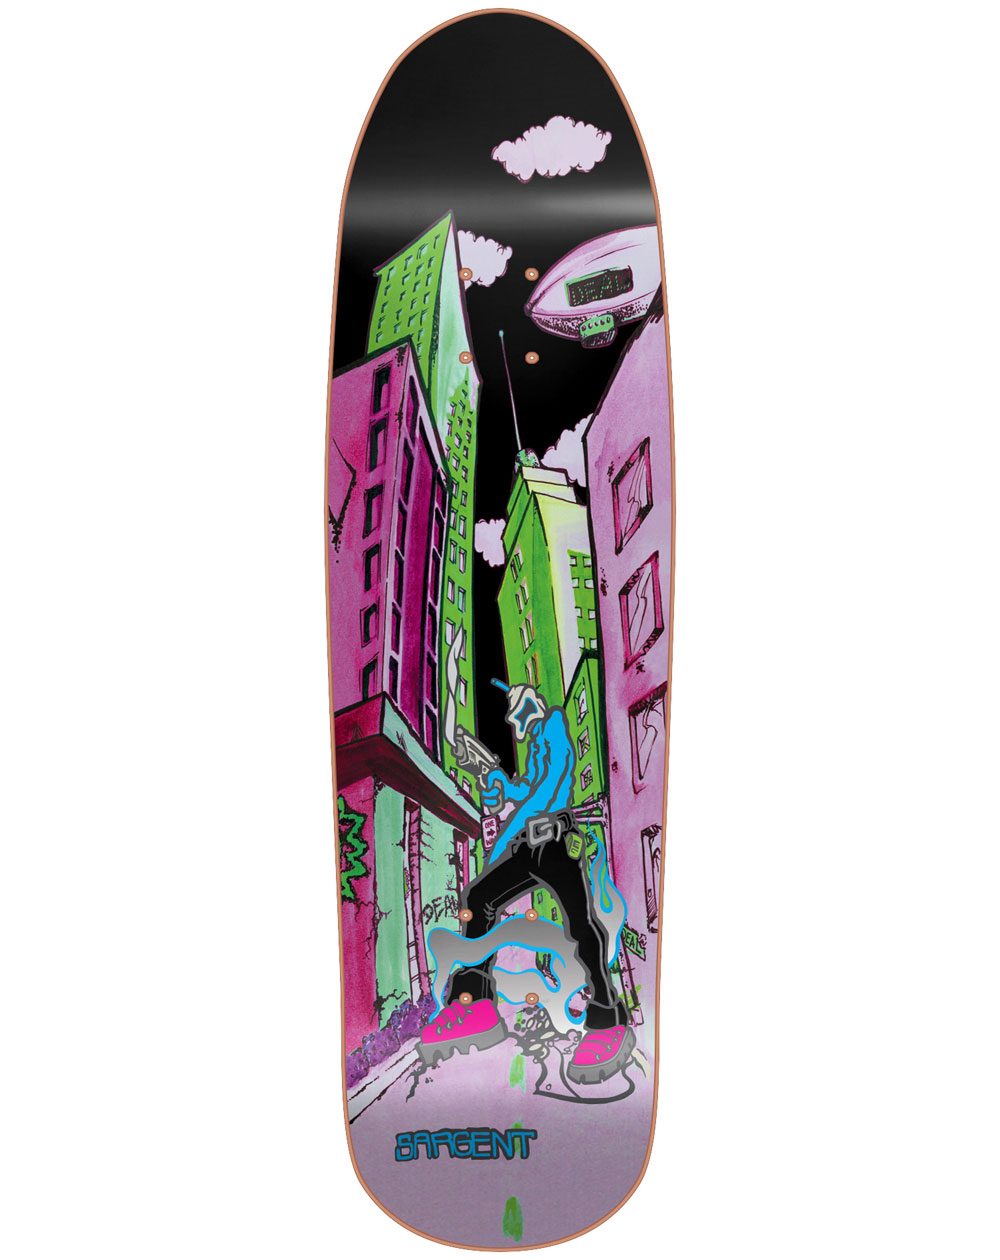 New Deal Tavola Skateboard Sargent Invader 9.25" Neon